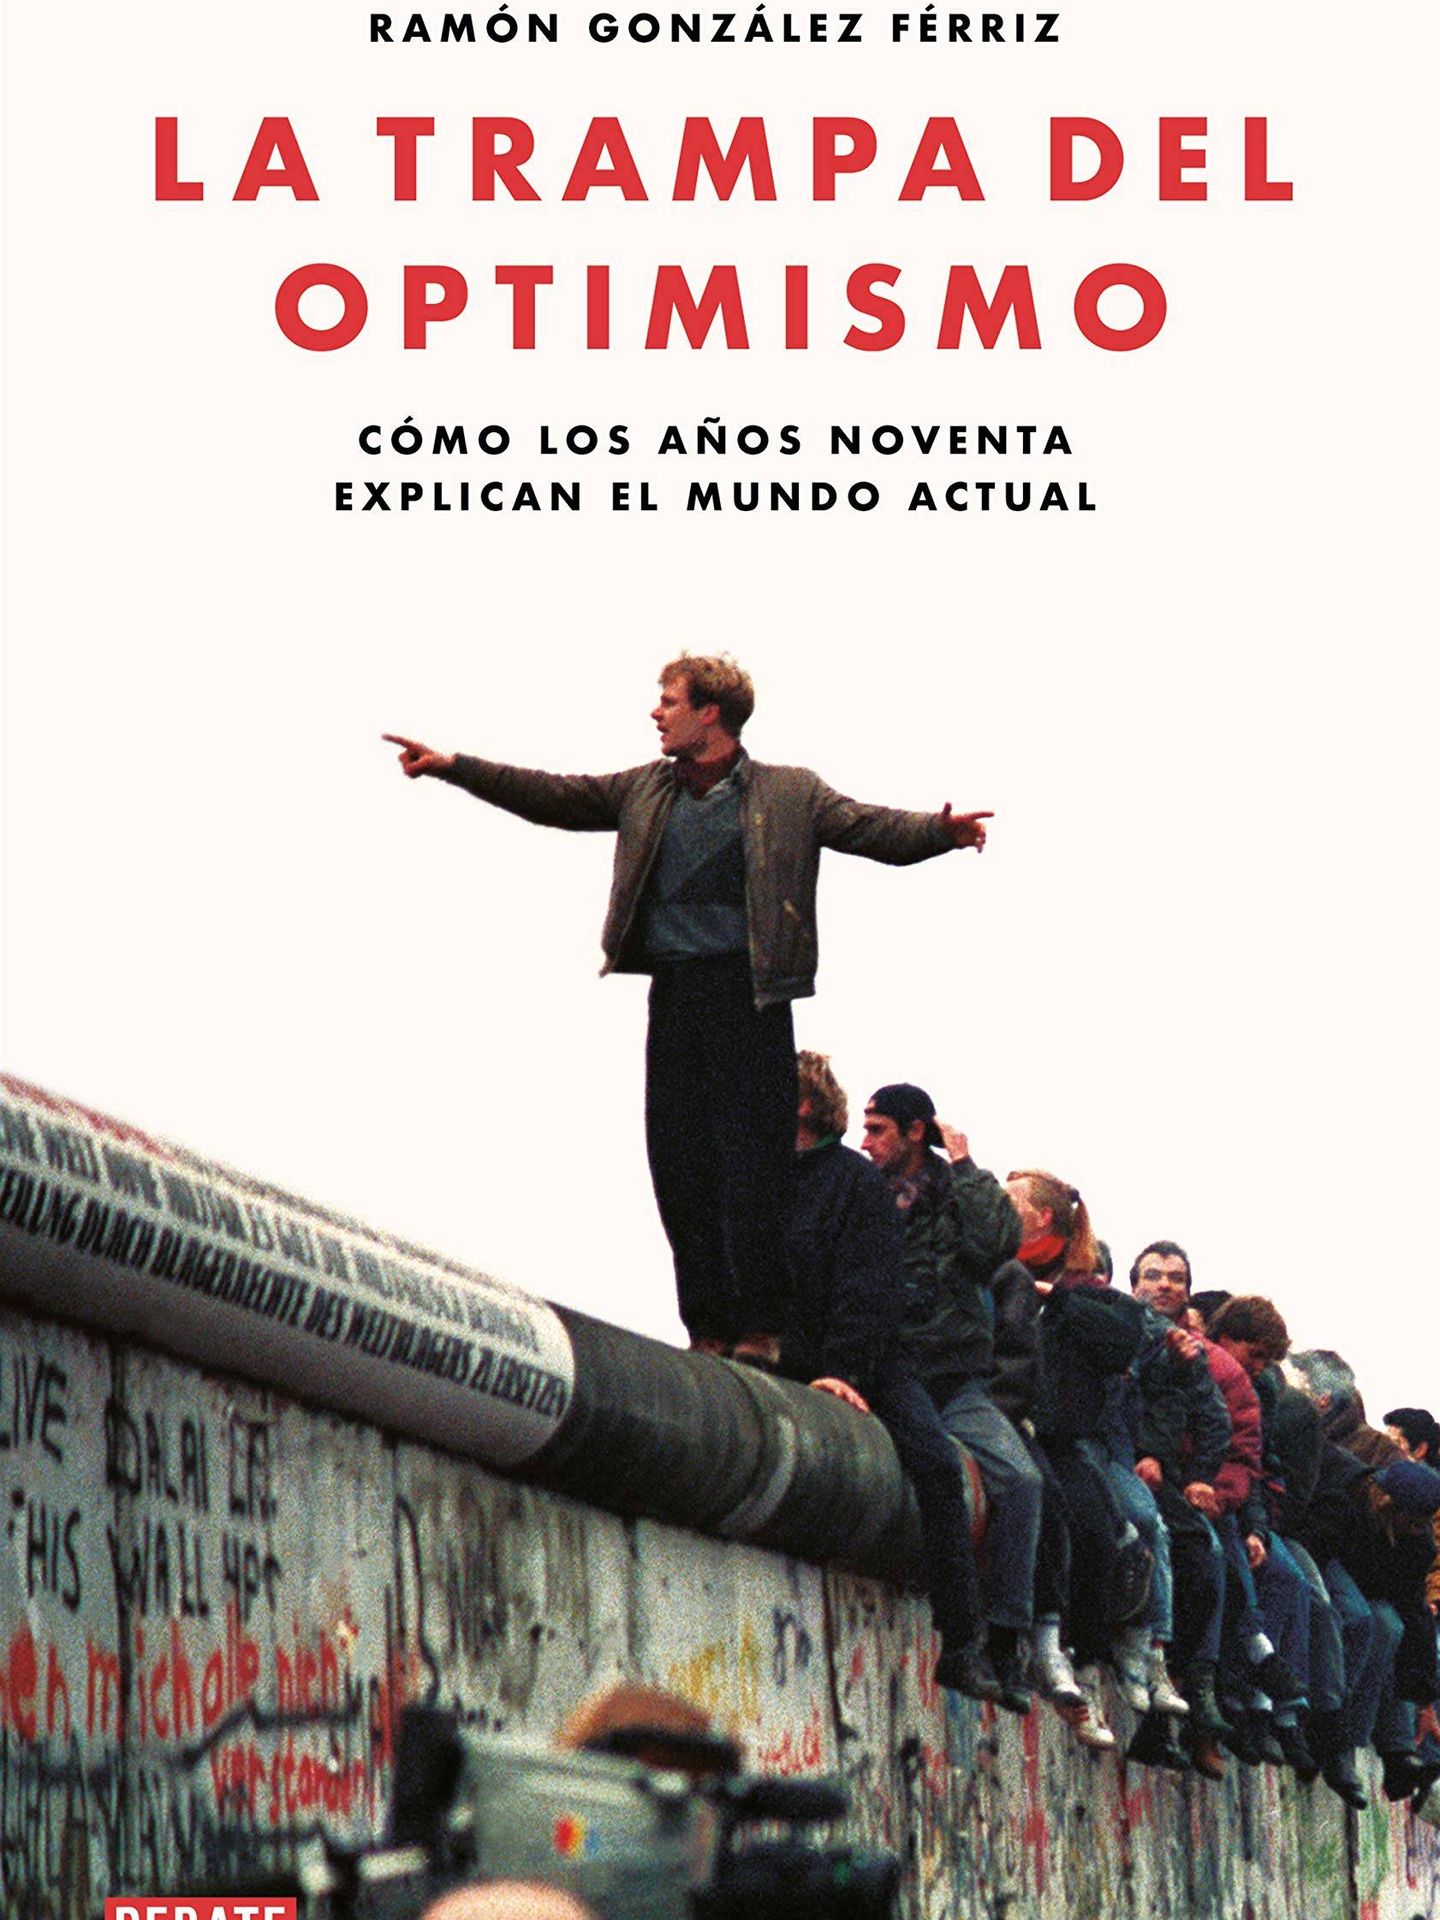 'La trampa del optimismo' (Debate).